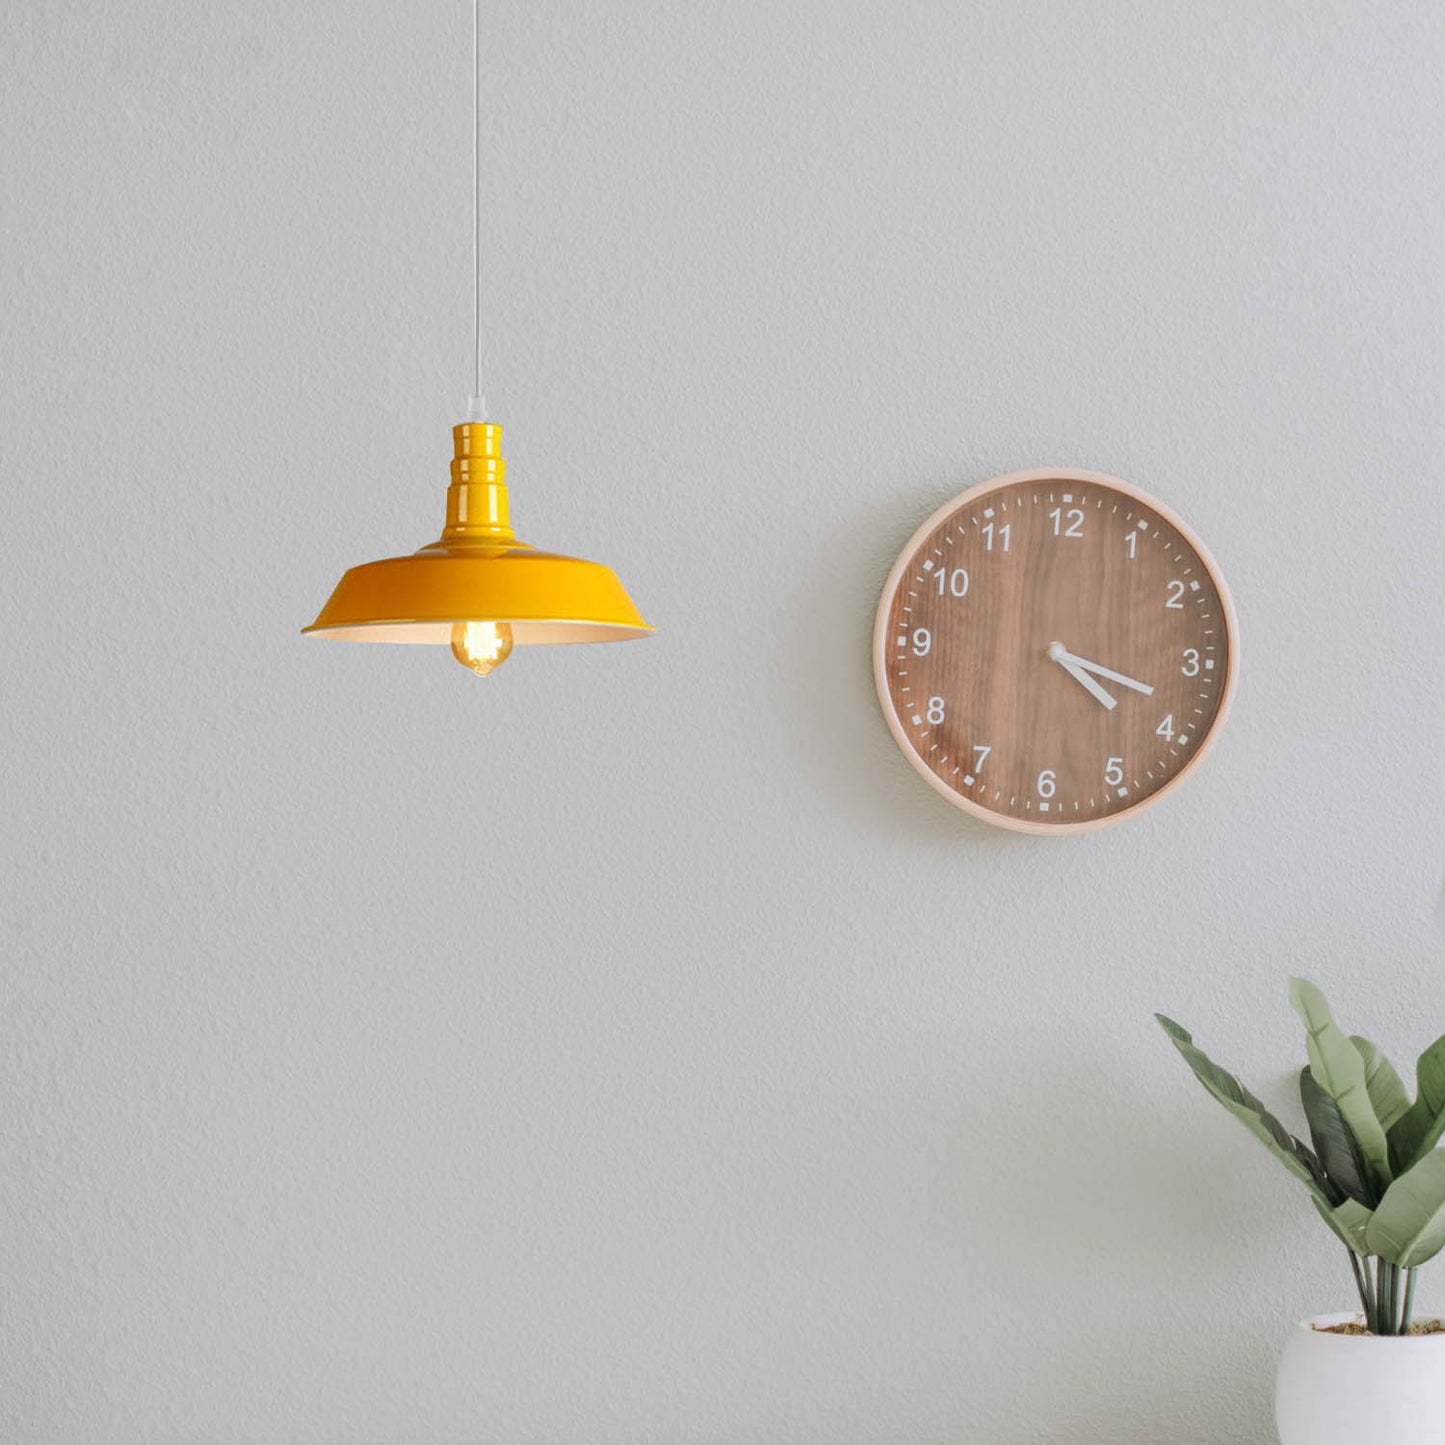 Modern Adjustable Hanging Bowl Yellow Pendant Lamp E27 Holder-Application image